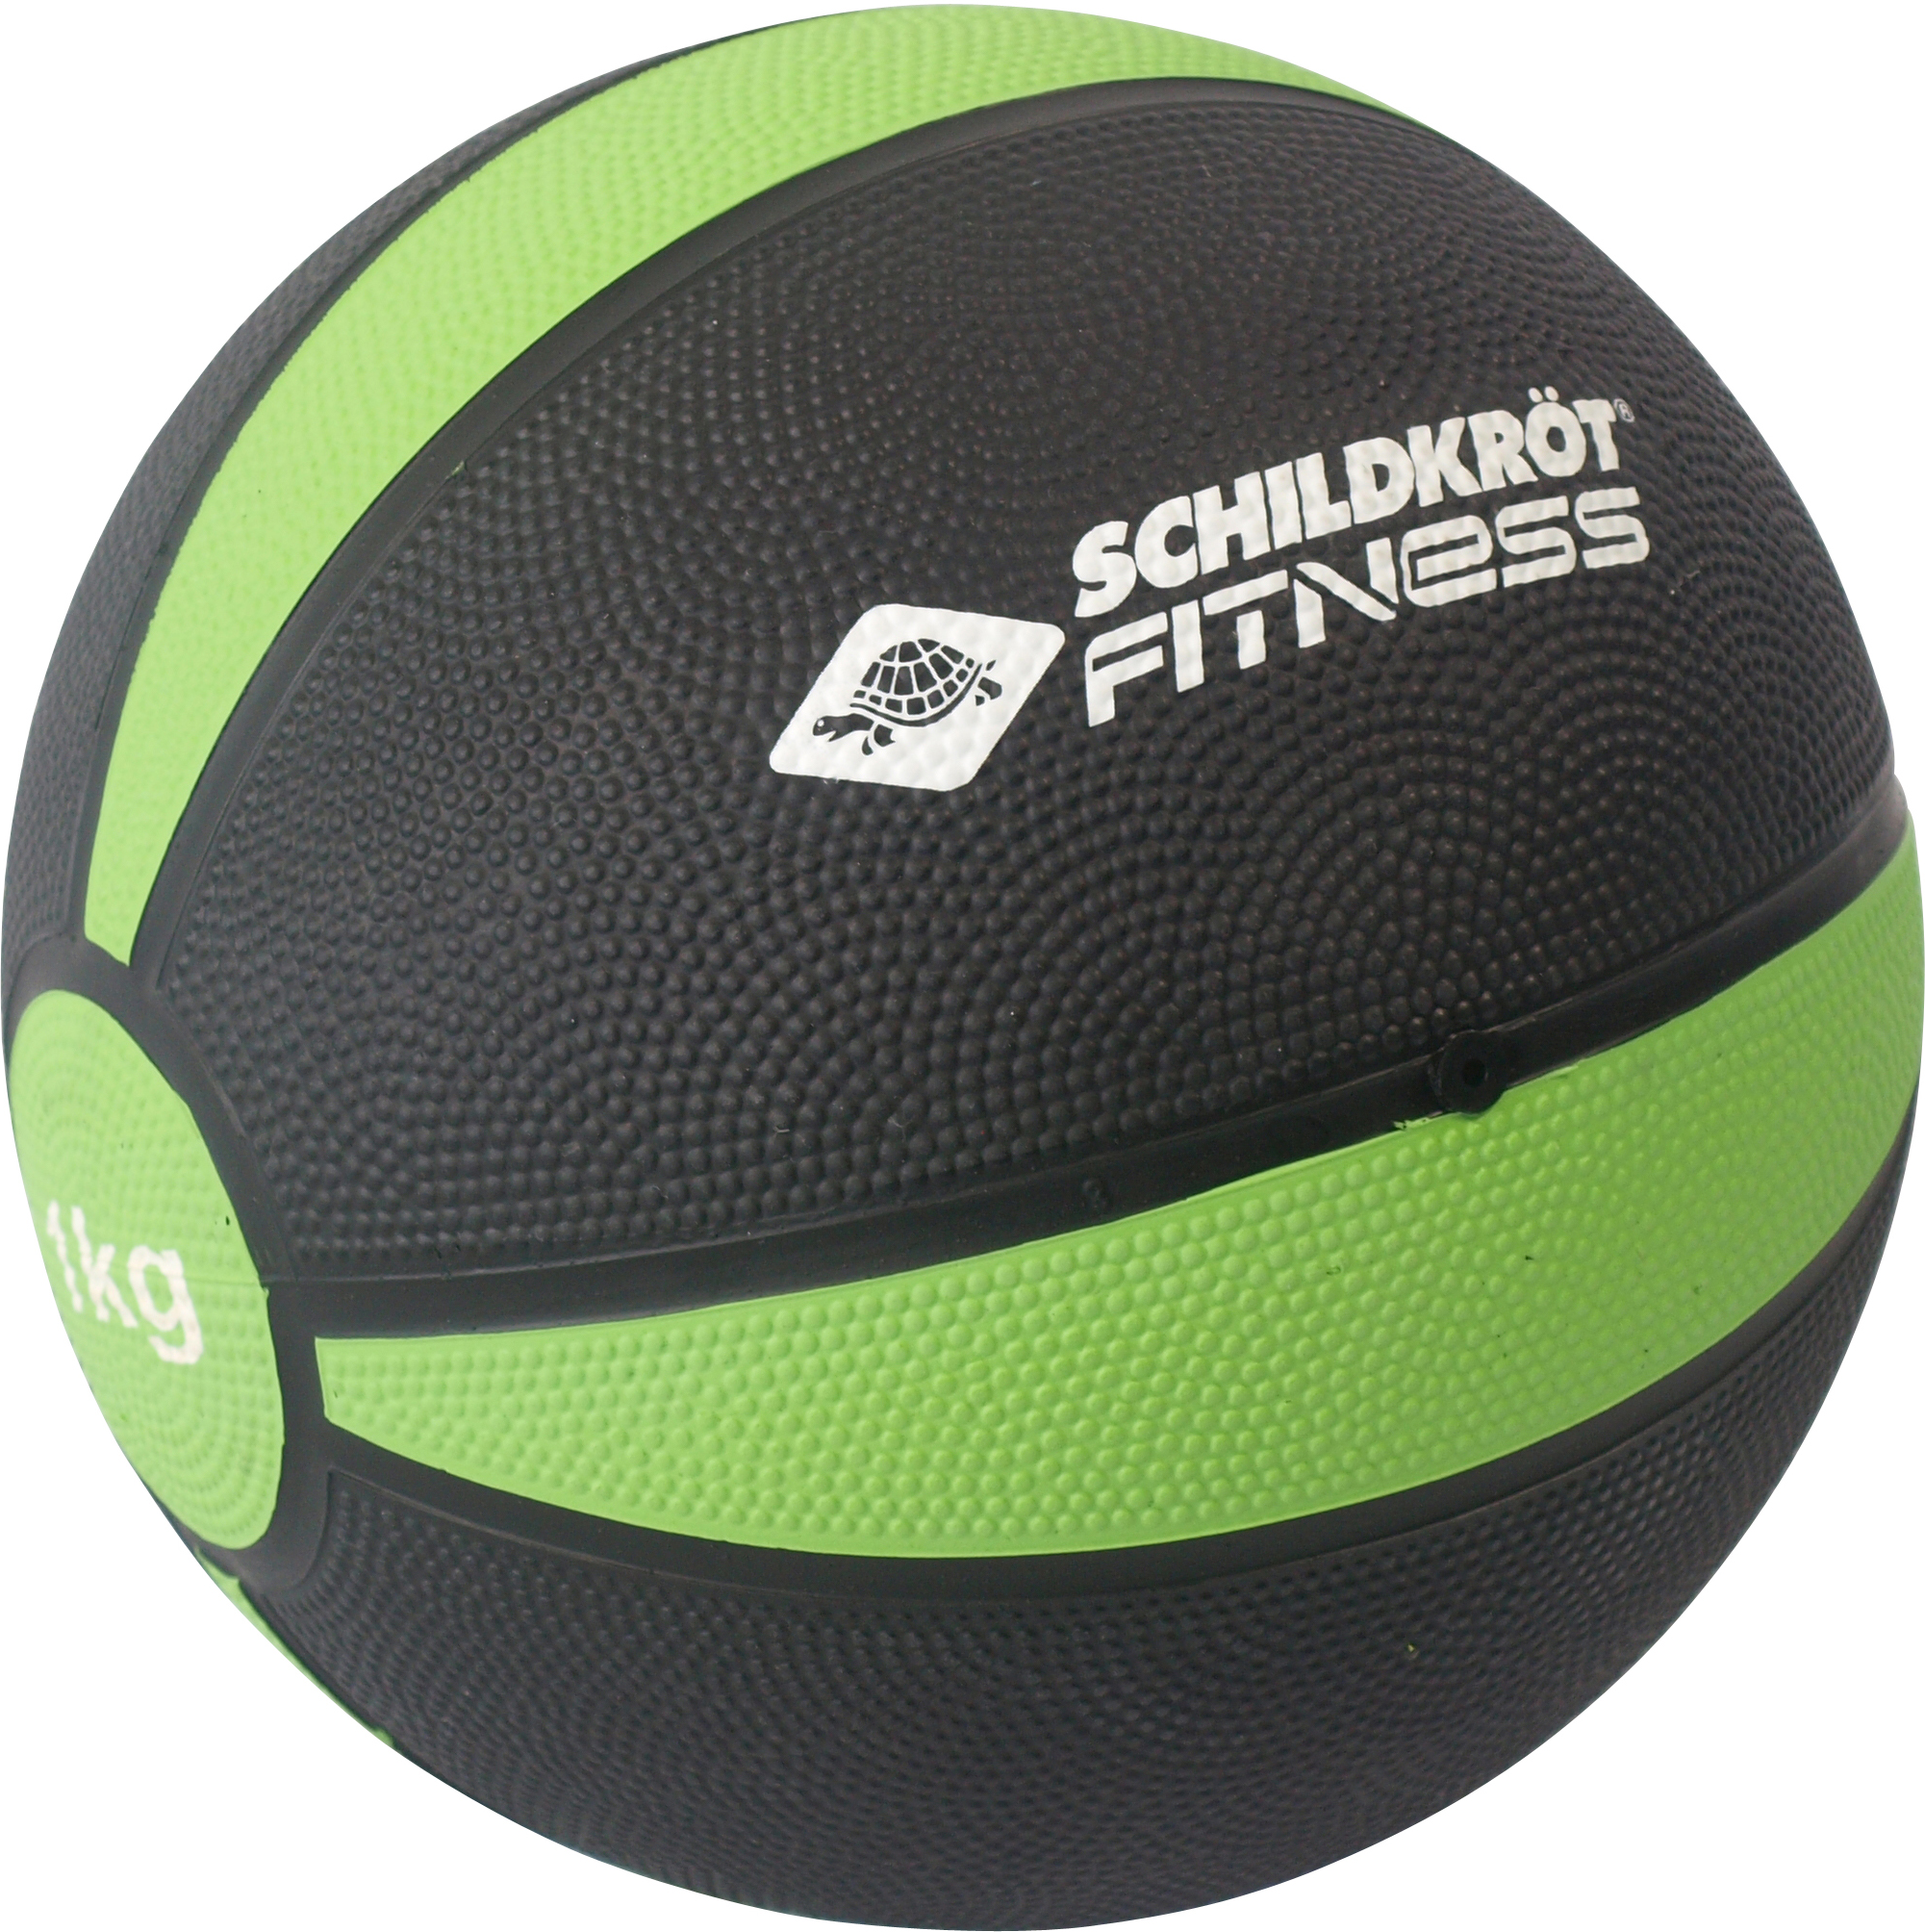 SK Fitness Wolf MEDICINE box 000 (black-green) in - Intersport BALL | sight 1kg